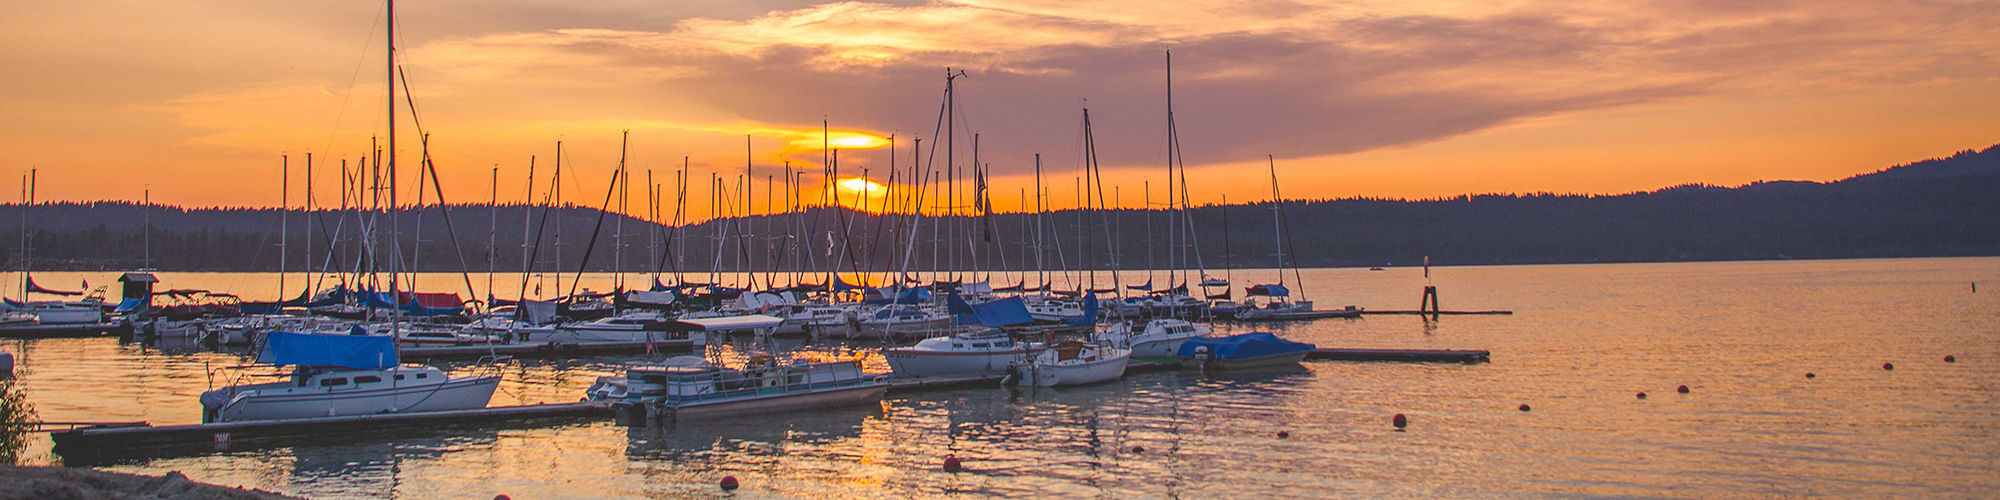 Sunset over Payette Lake in McCall, Idaho at a sailboat marina.